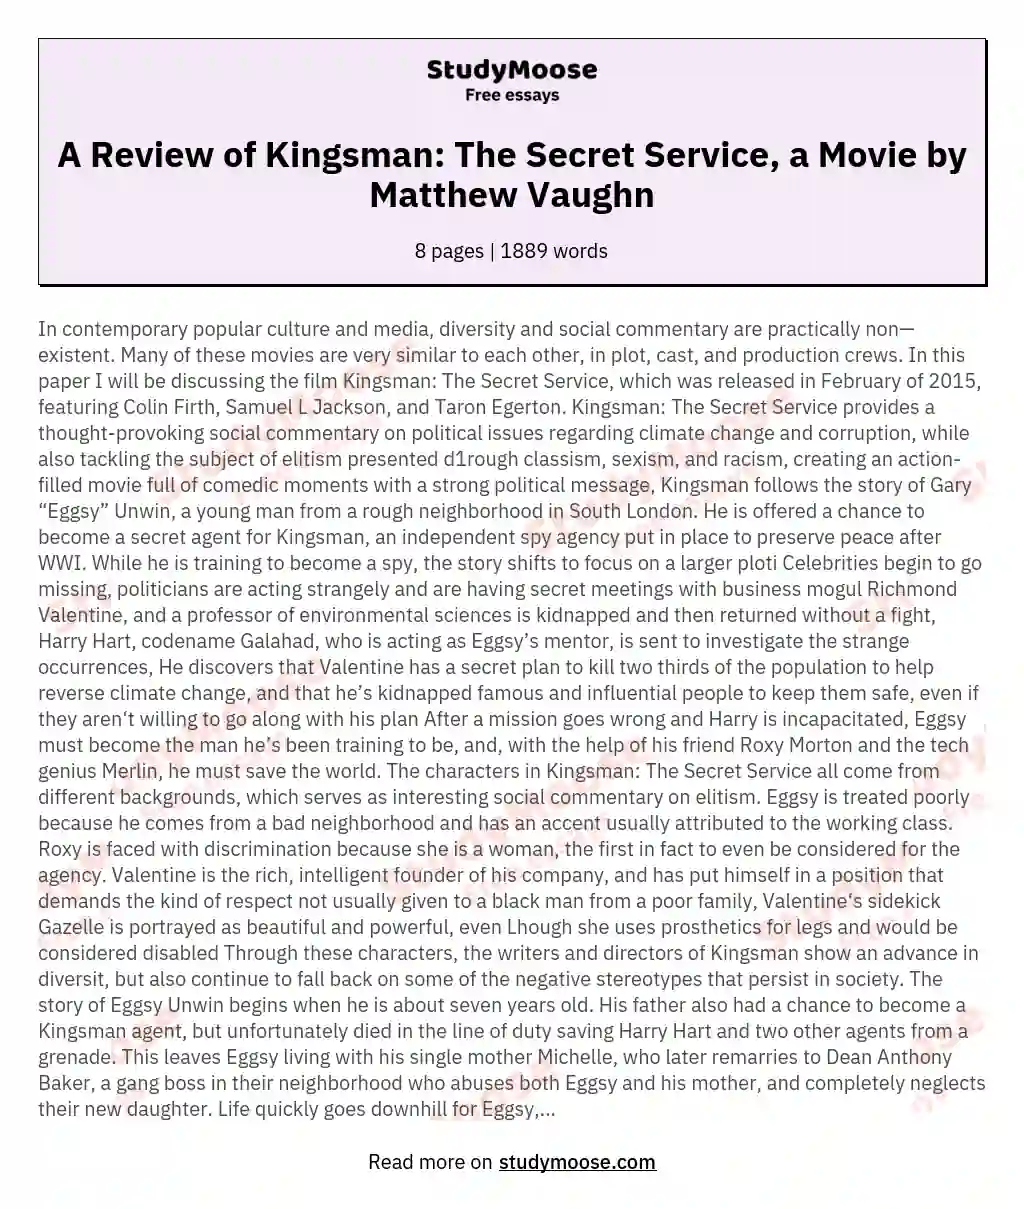 A Review of Kingsman: The Secret Service, a Movie by Matthew Vaughn essay